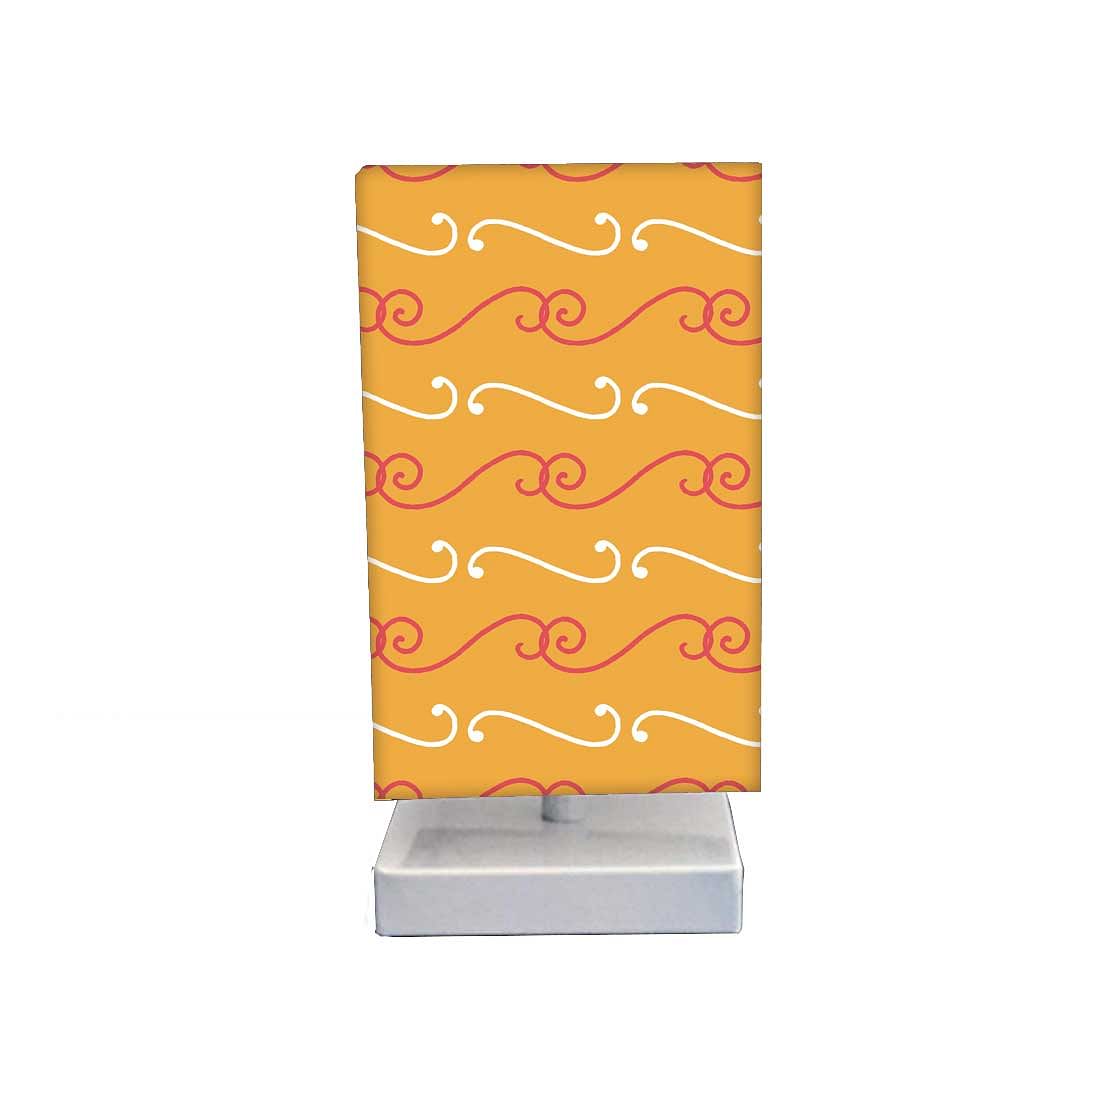 Table Lamp For Bedroom - Ethnic Pattern Orange Nutcase